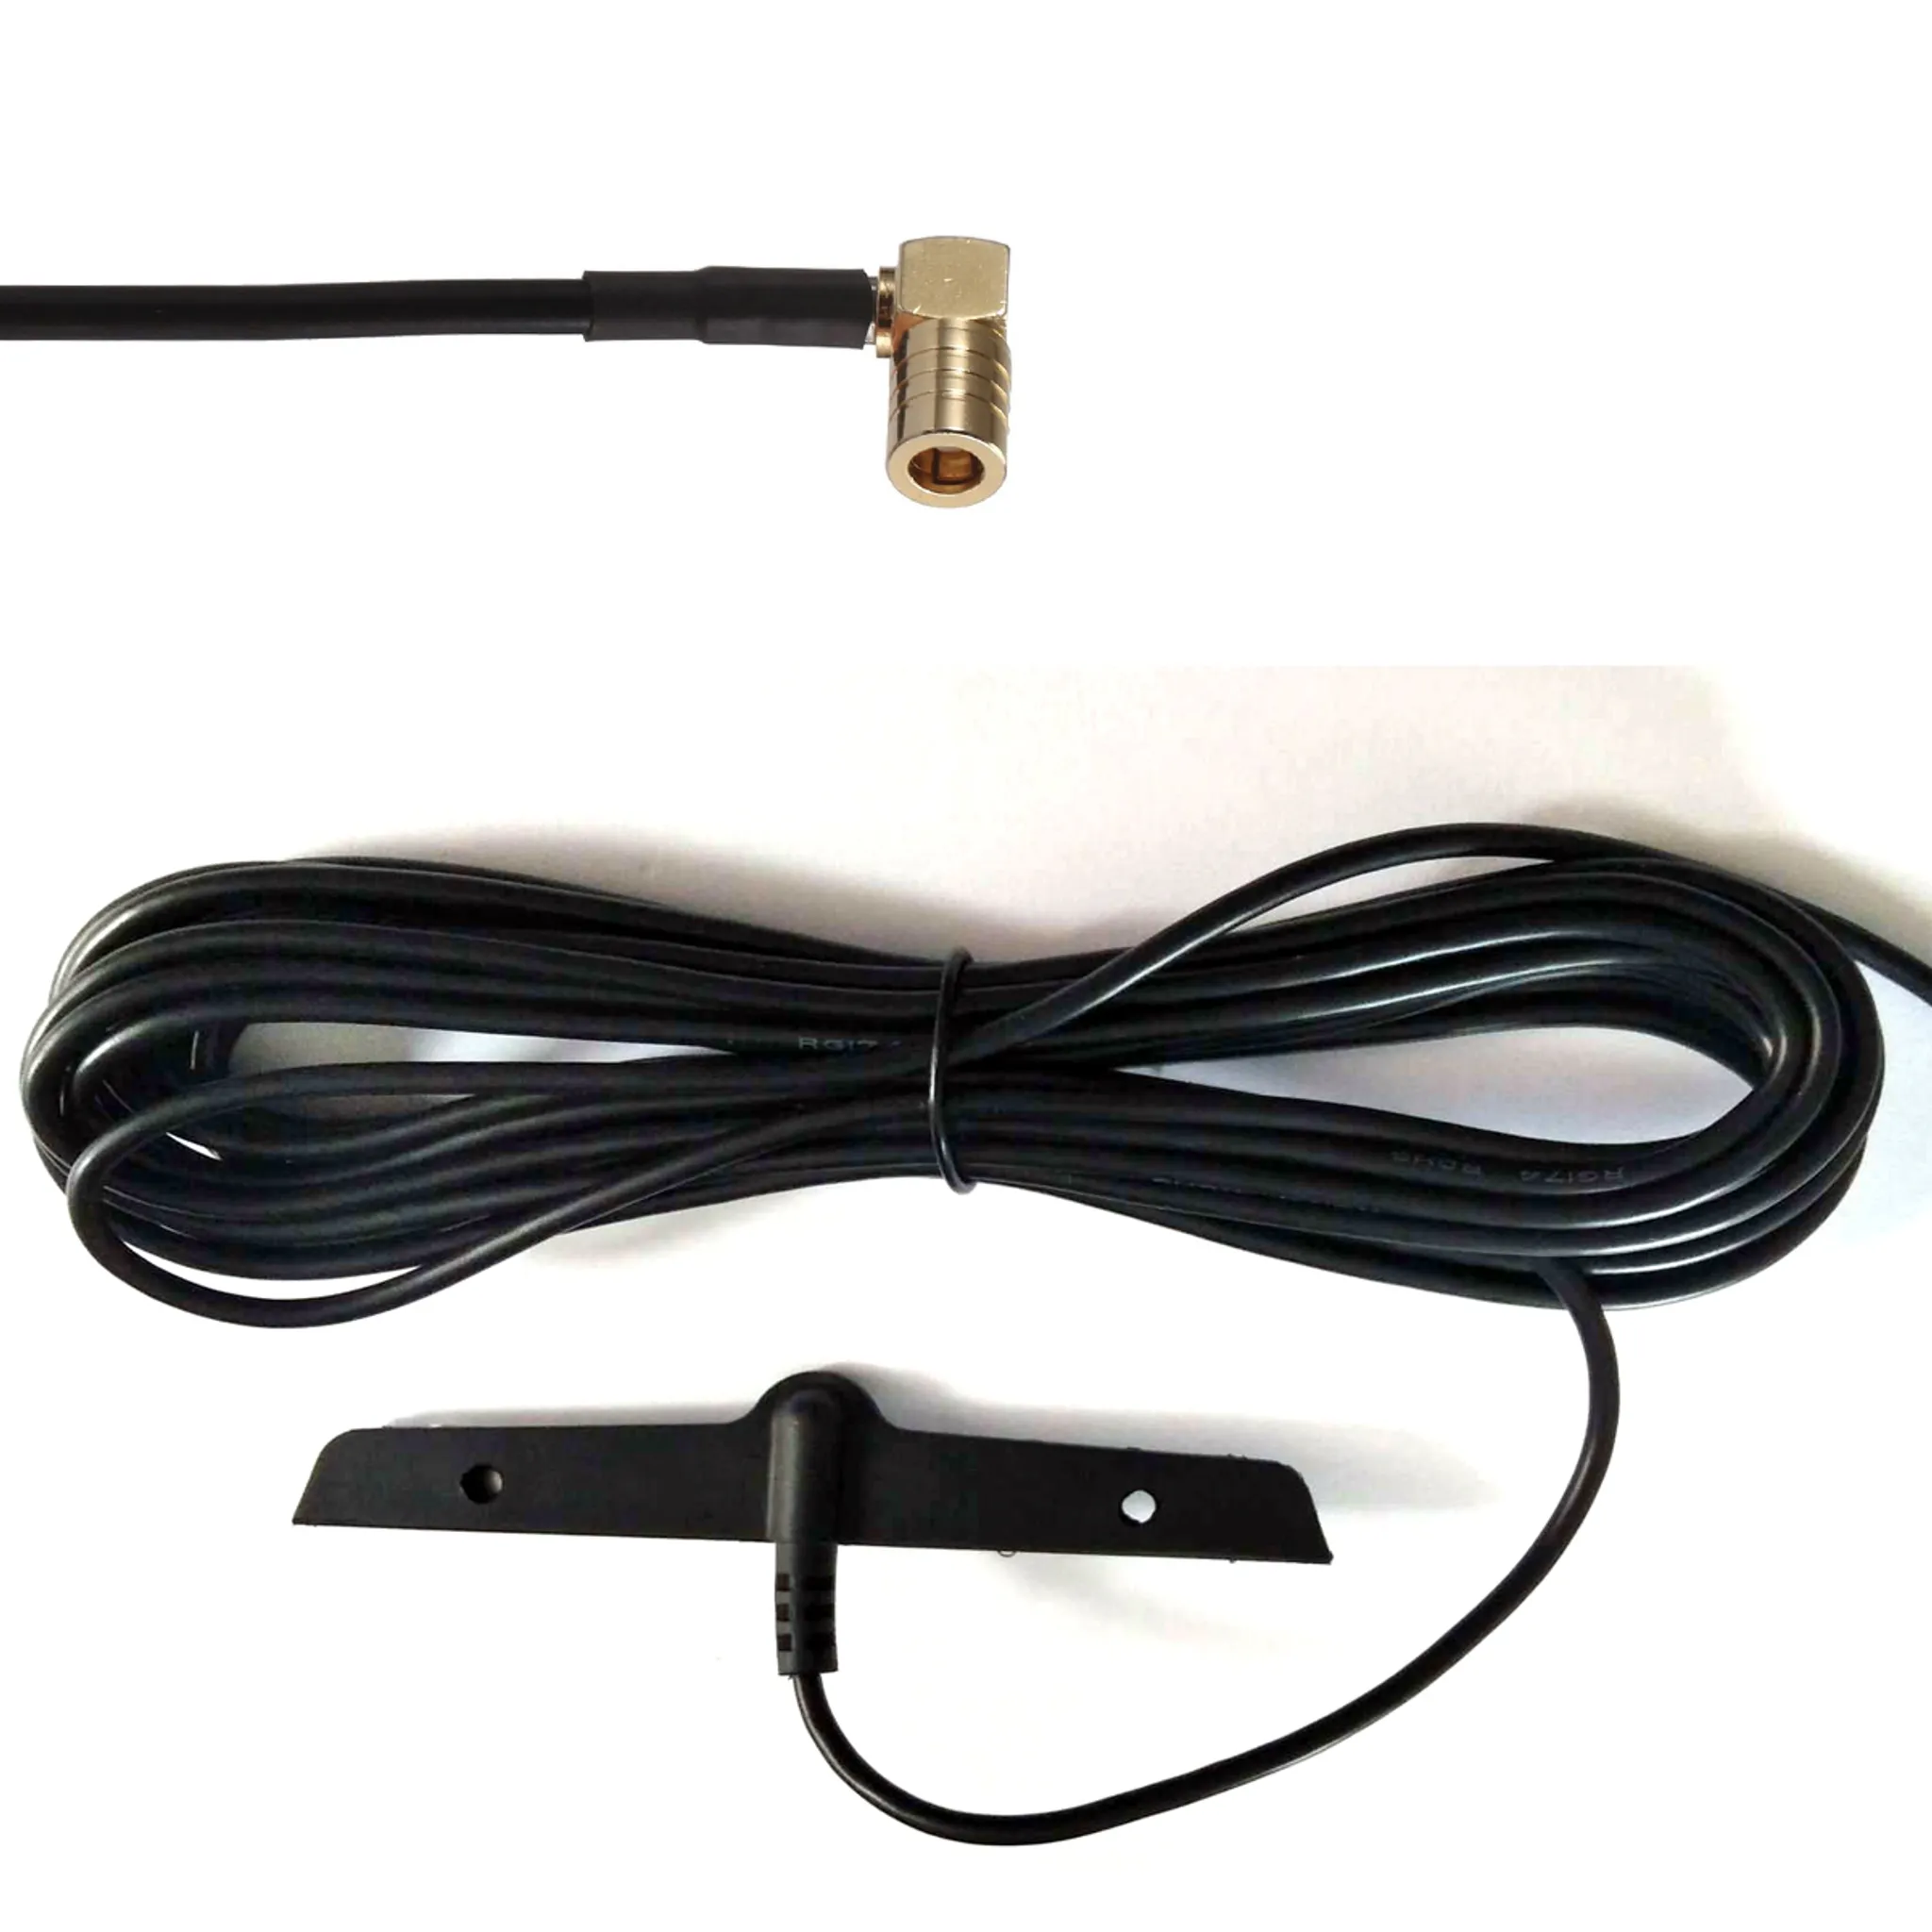 Antennenadapter SMB (m) to FAKRA (f), 16,90 €